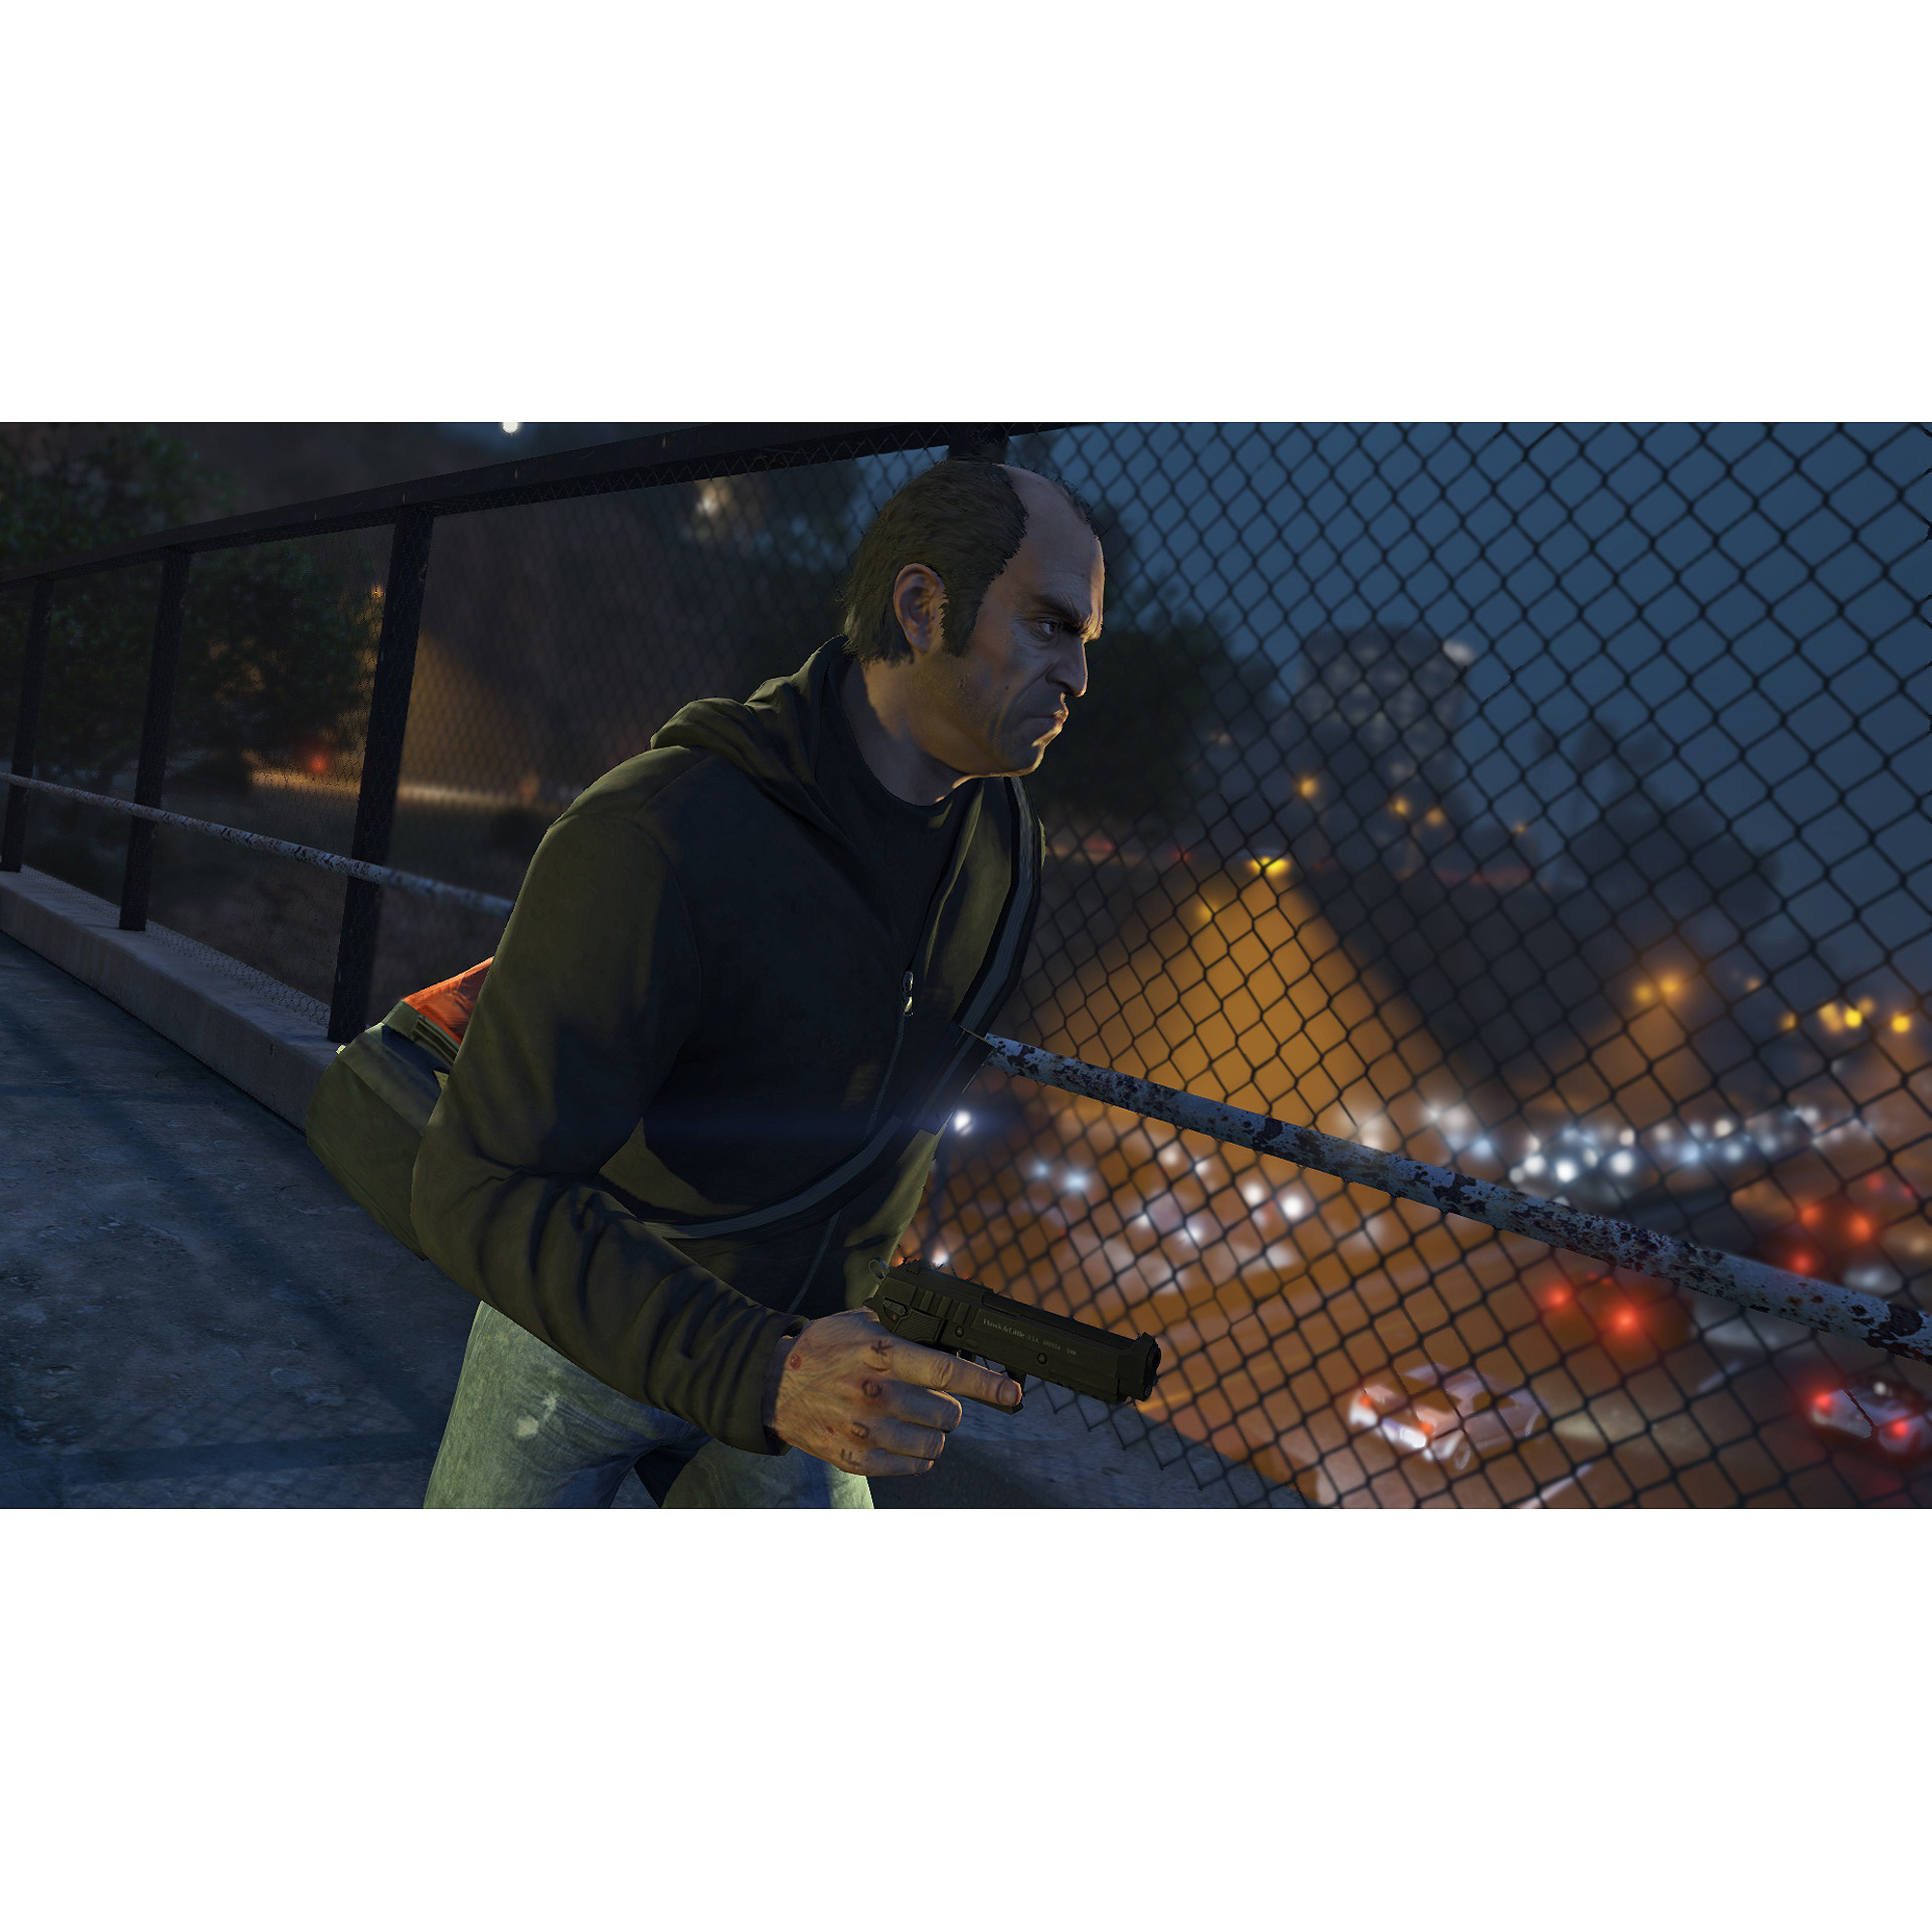 Grand Theft Auto V, Rockstar Games, PlayStation 4 - image 3 of 19